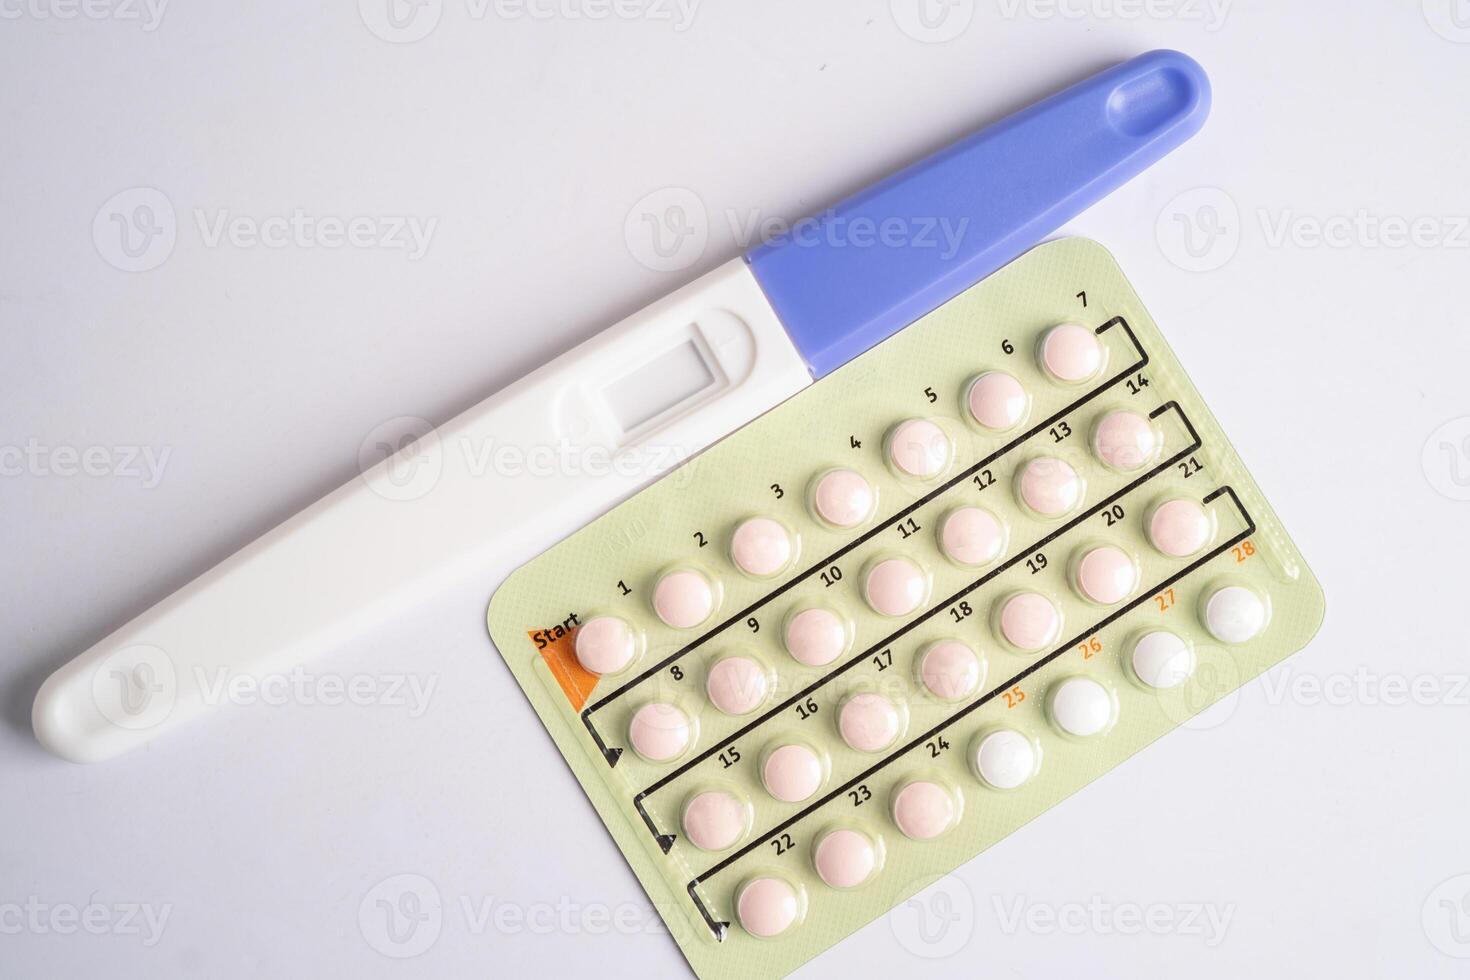 Pregnancy test and birth control pills, contraception health and medicine. photo